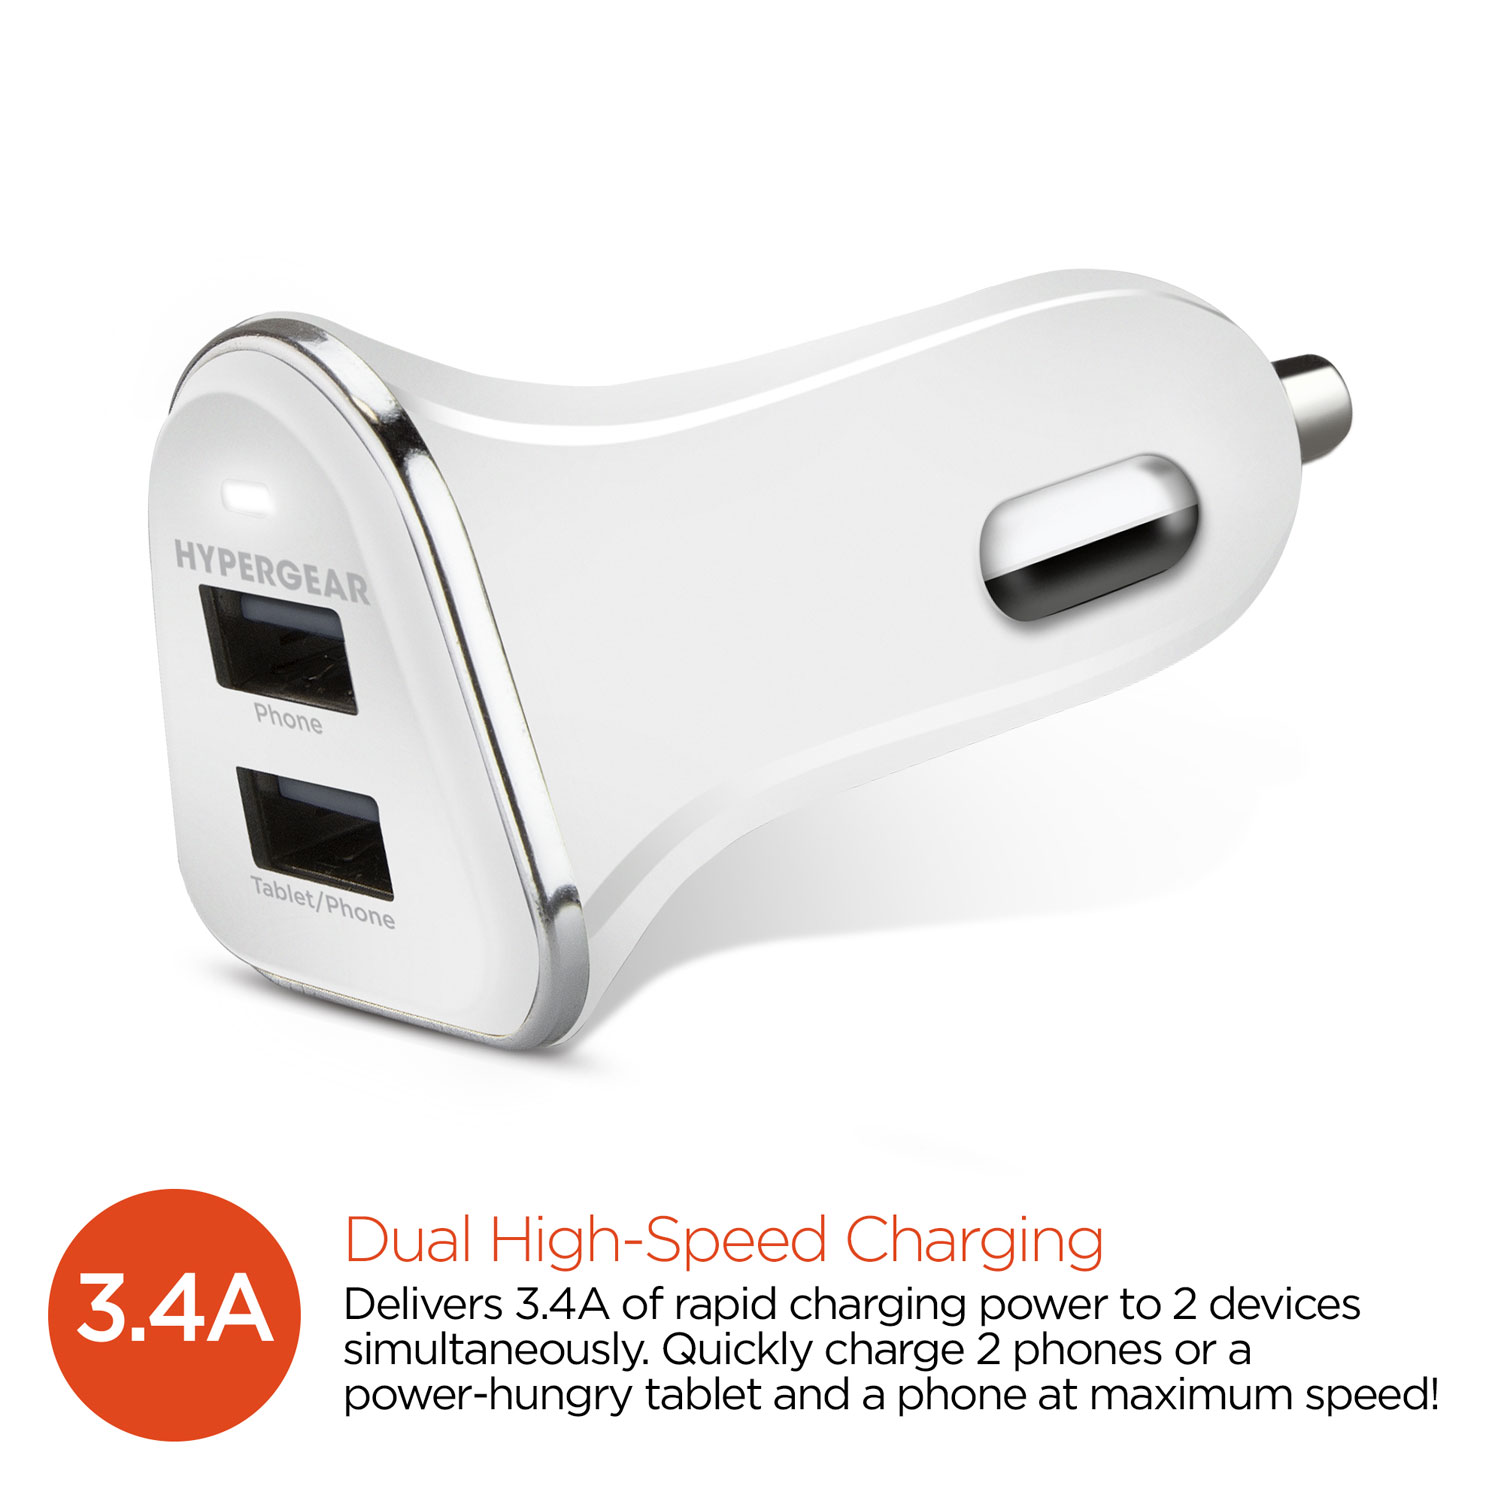 High-Power Dual USB 3.4A Car Charger